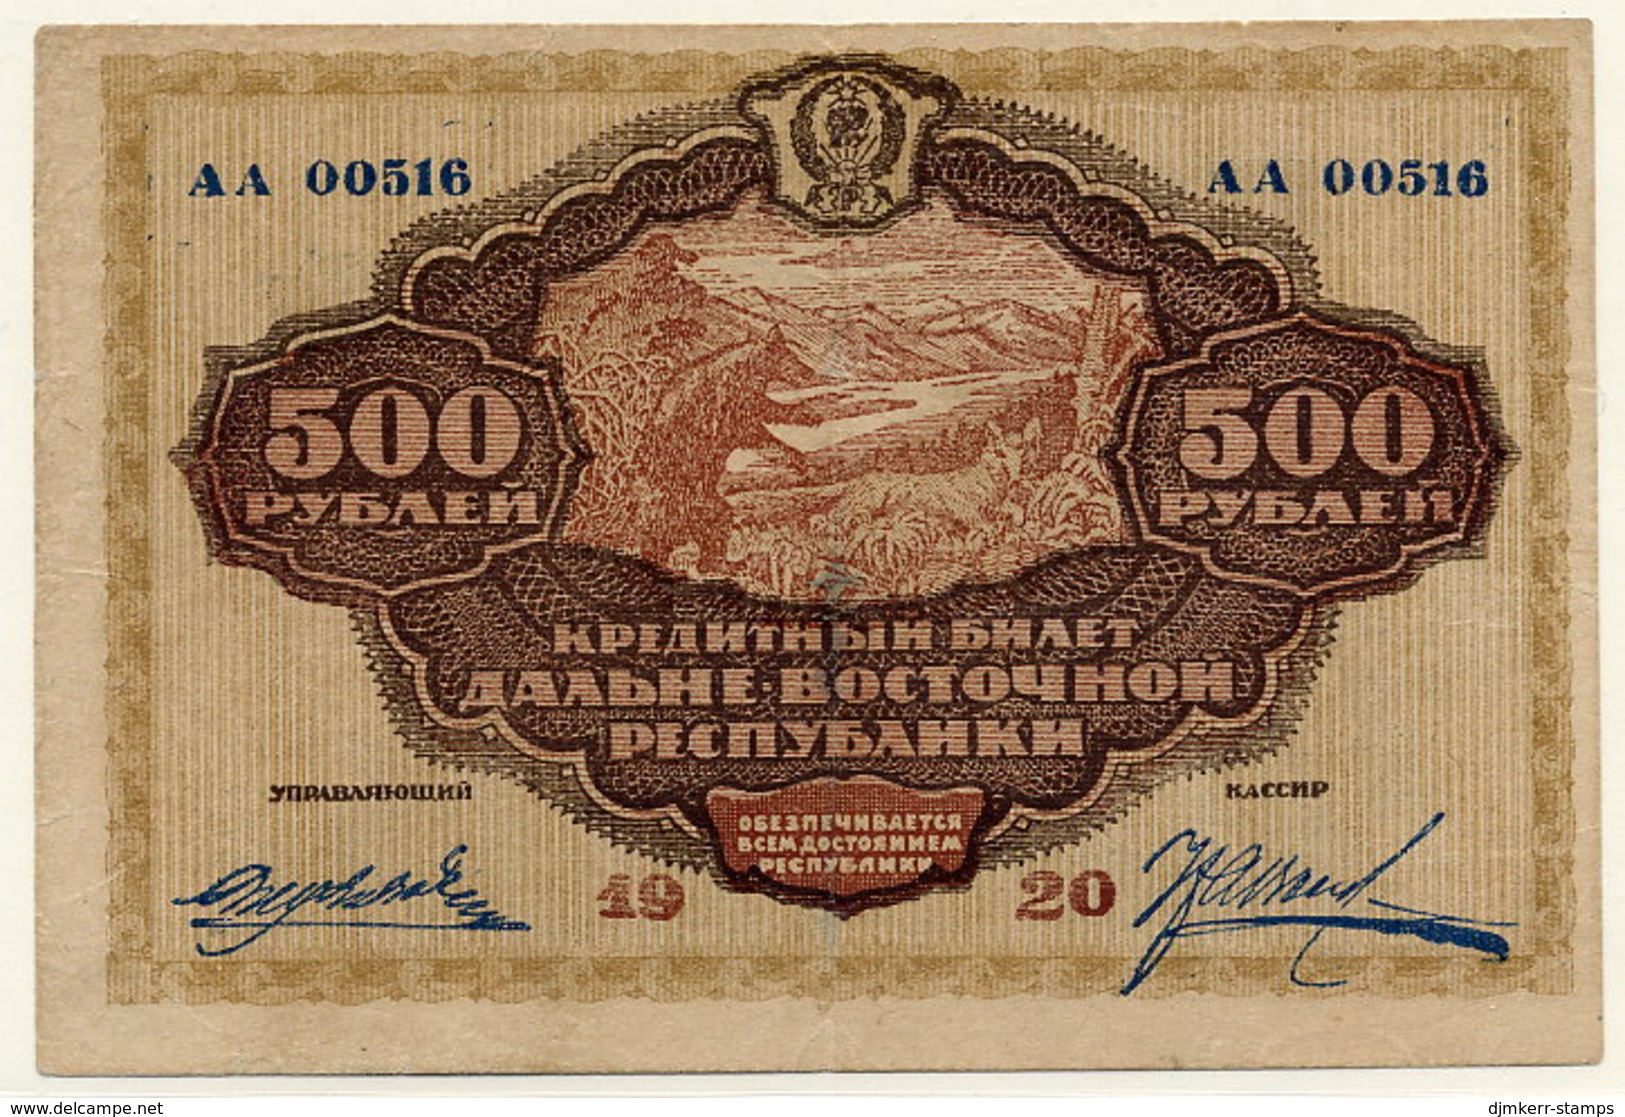 EAST SIBERIA (Far Eastern Republic) 1920 500 Rub.  VF S1207 - Russie